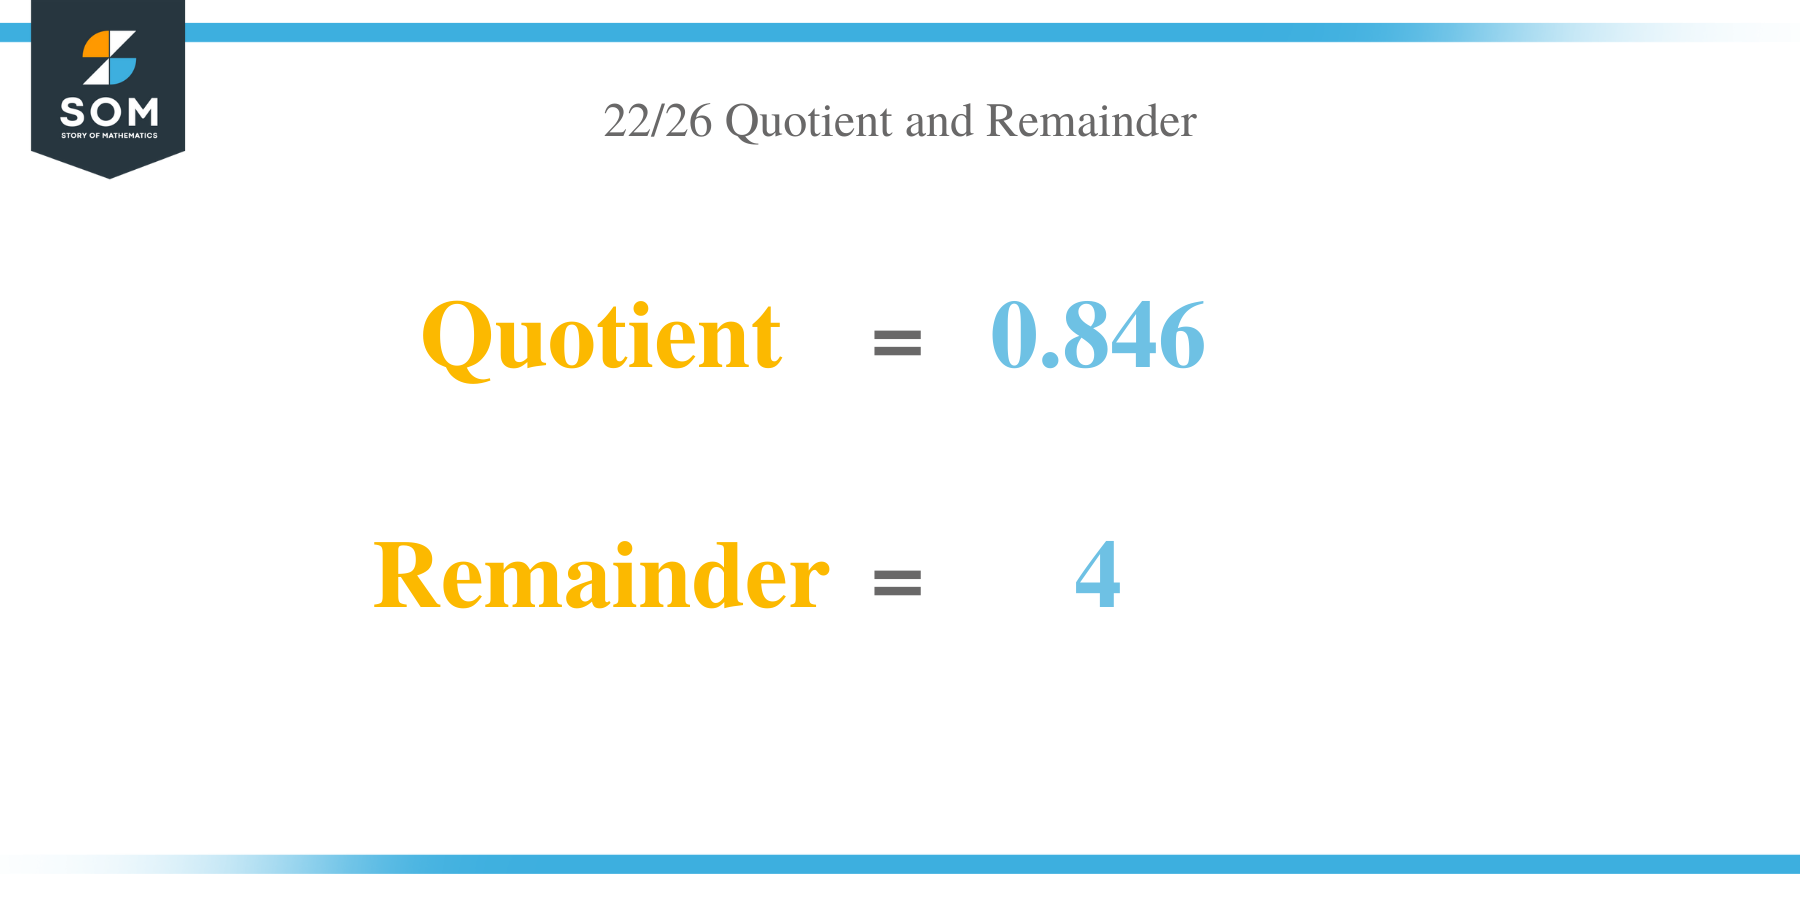 Quotient and Remainder of 22 per 26